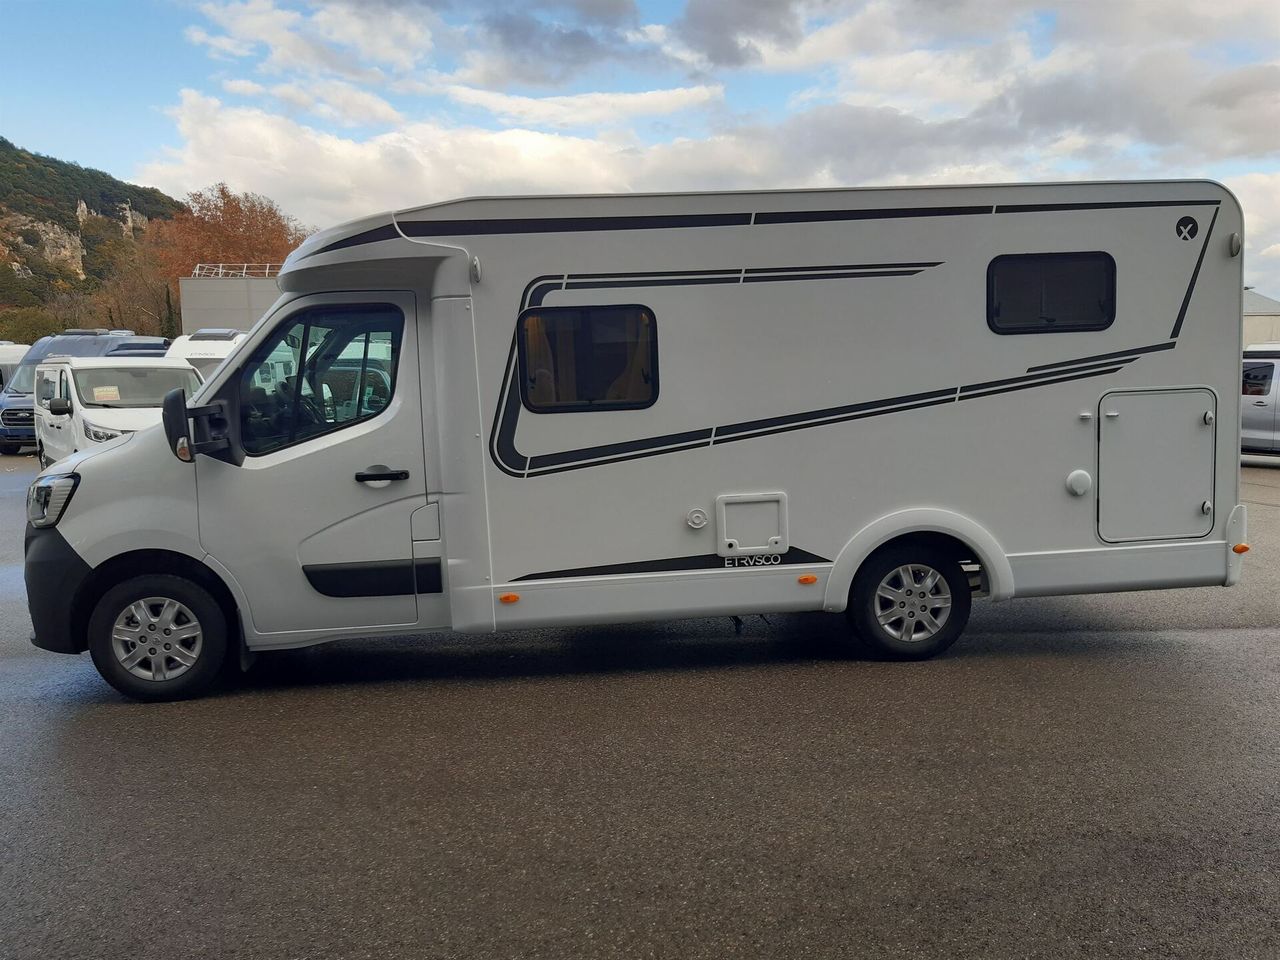 Camping-car - Etrusco - V6.8 SR / 1 500€ D'ACCESSOIRES OFFERTS - 2024